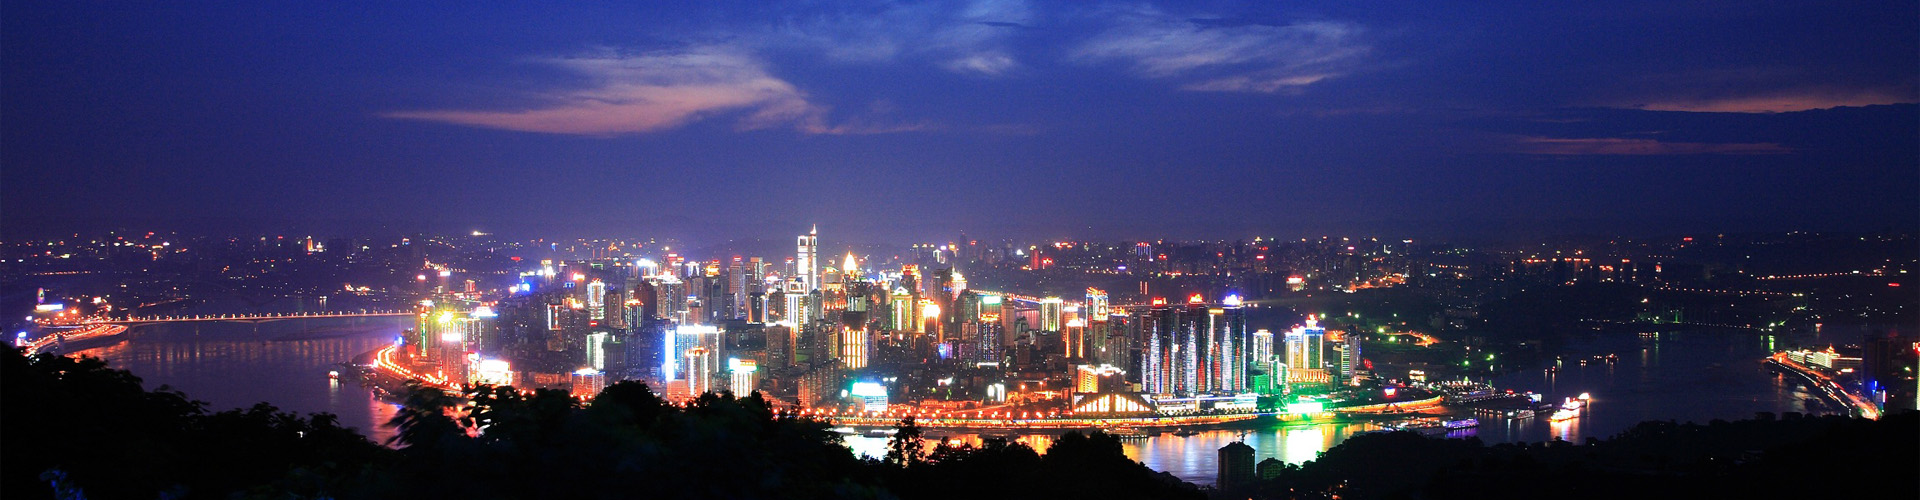 ville de Chongqing